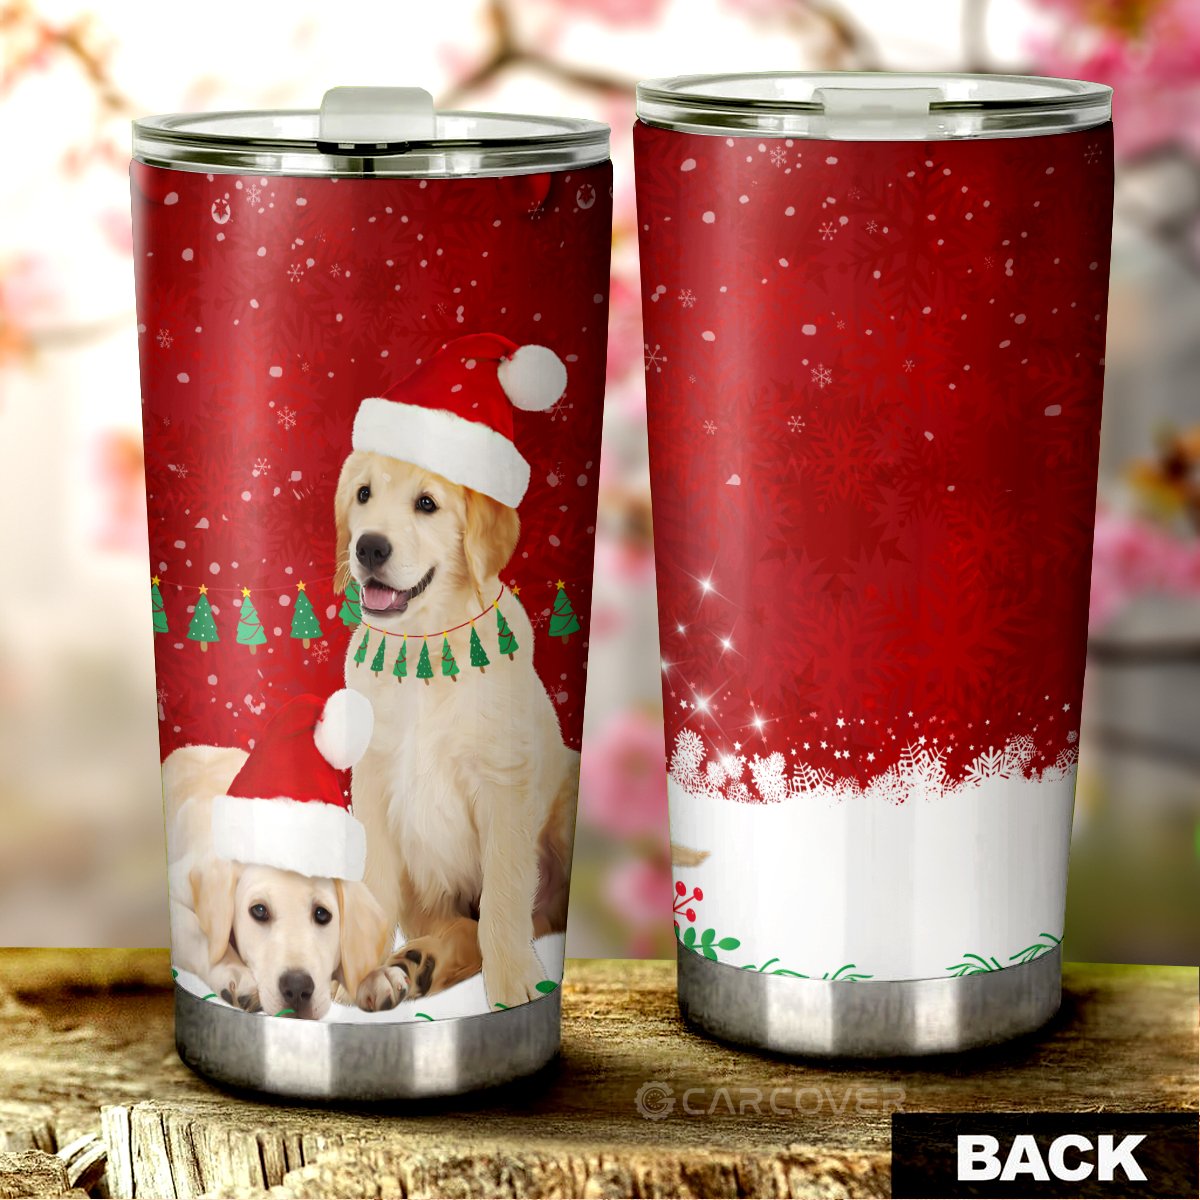 Labrador Retrievers Tumbler Cup Custom Christmas Dog Car Accessories - Gearcarcover - 4